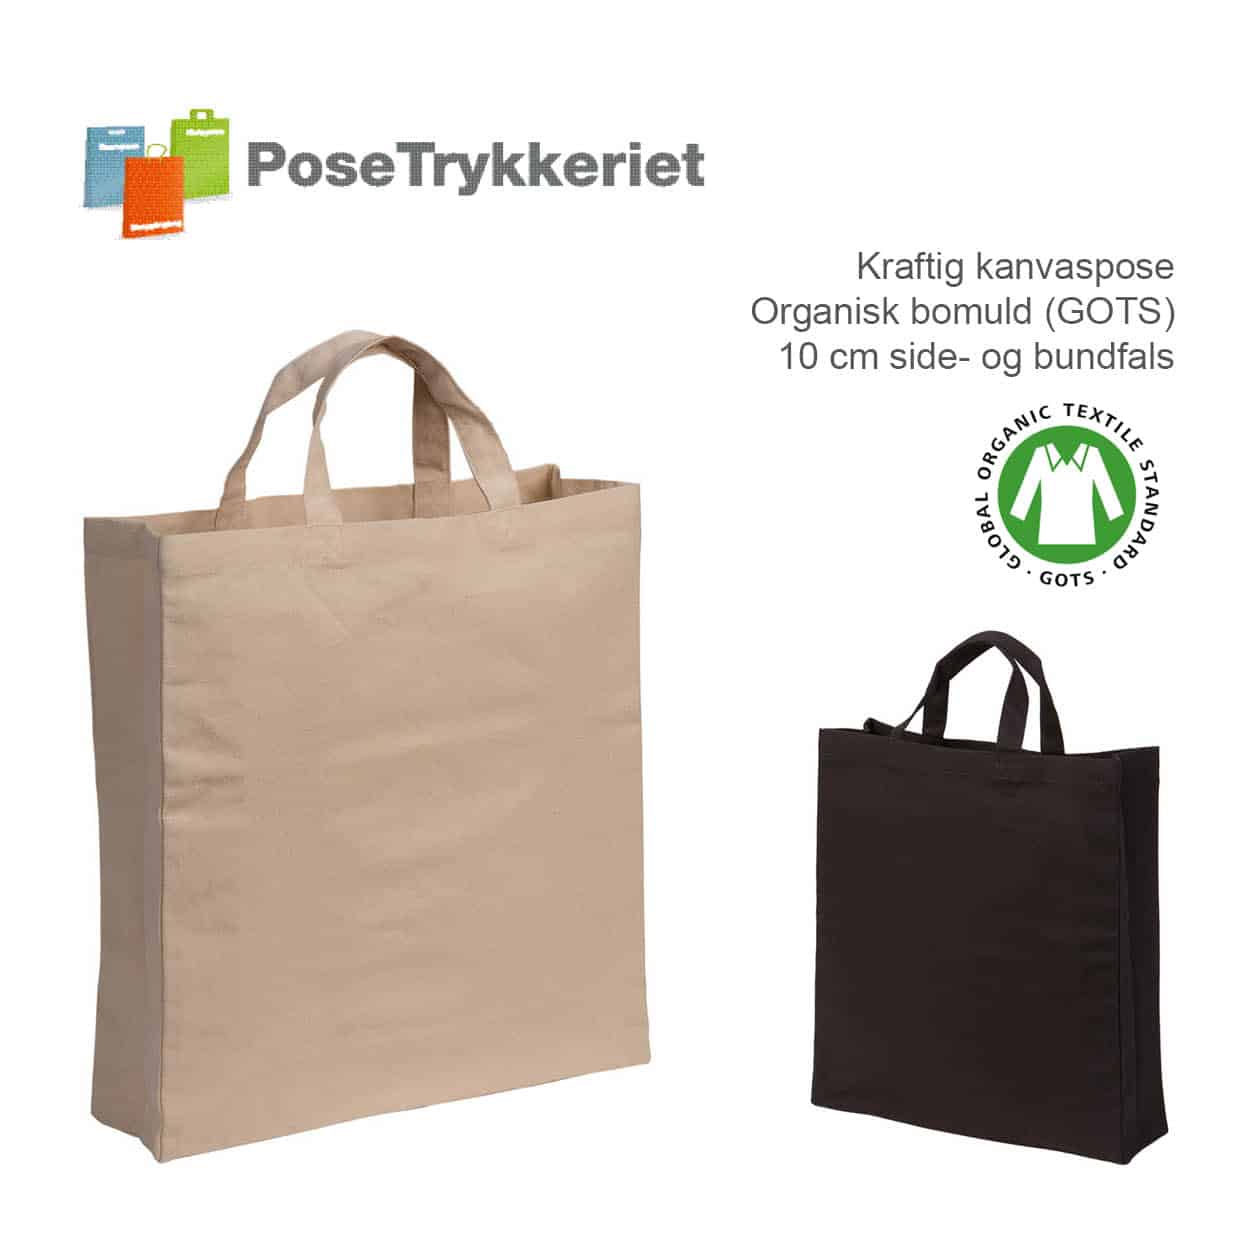 Kanvaspose, ORGANISK bomuld med logotryk. PoseTrykkeriet.dk